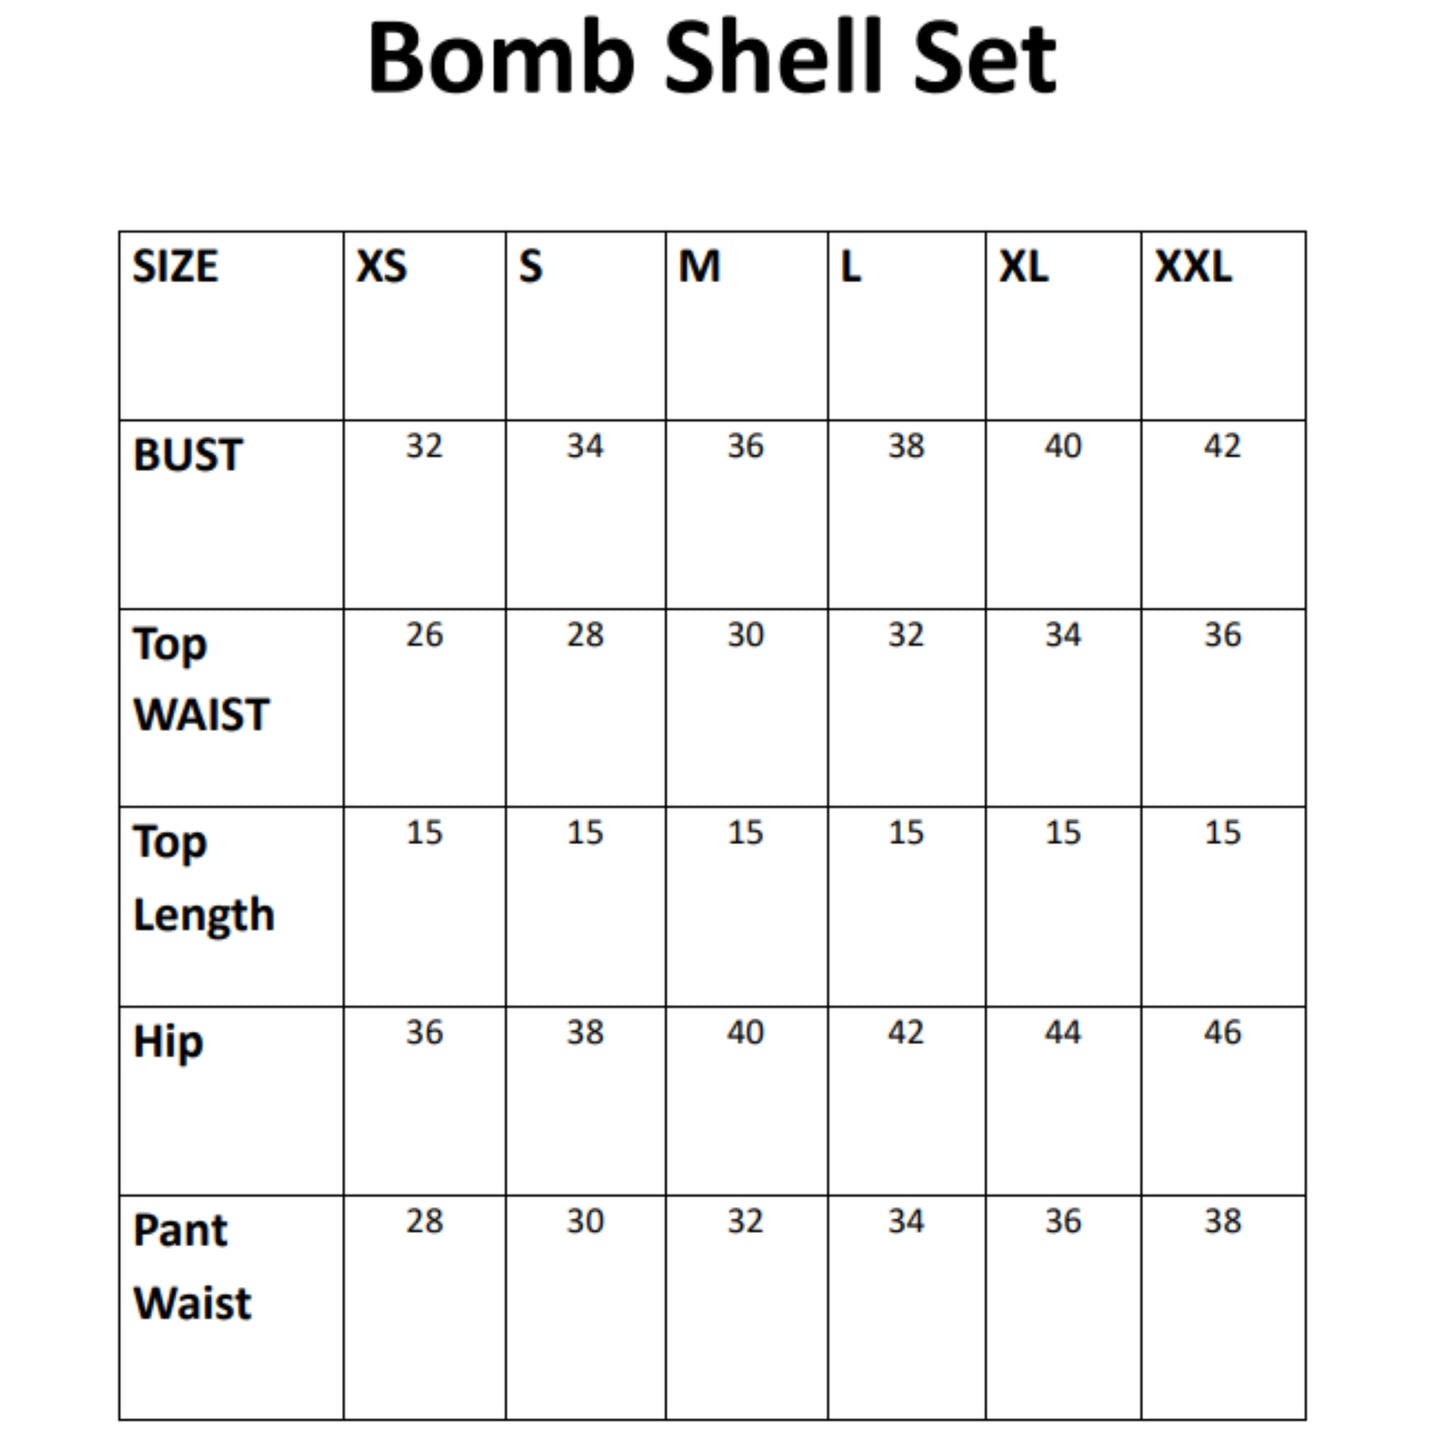 Bomb shell set